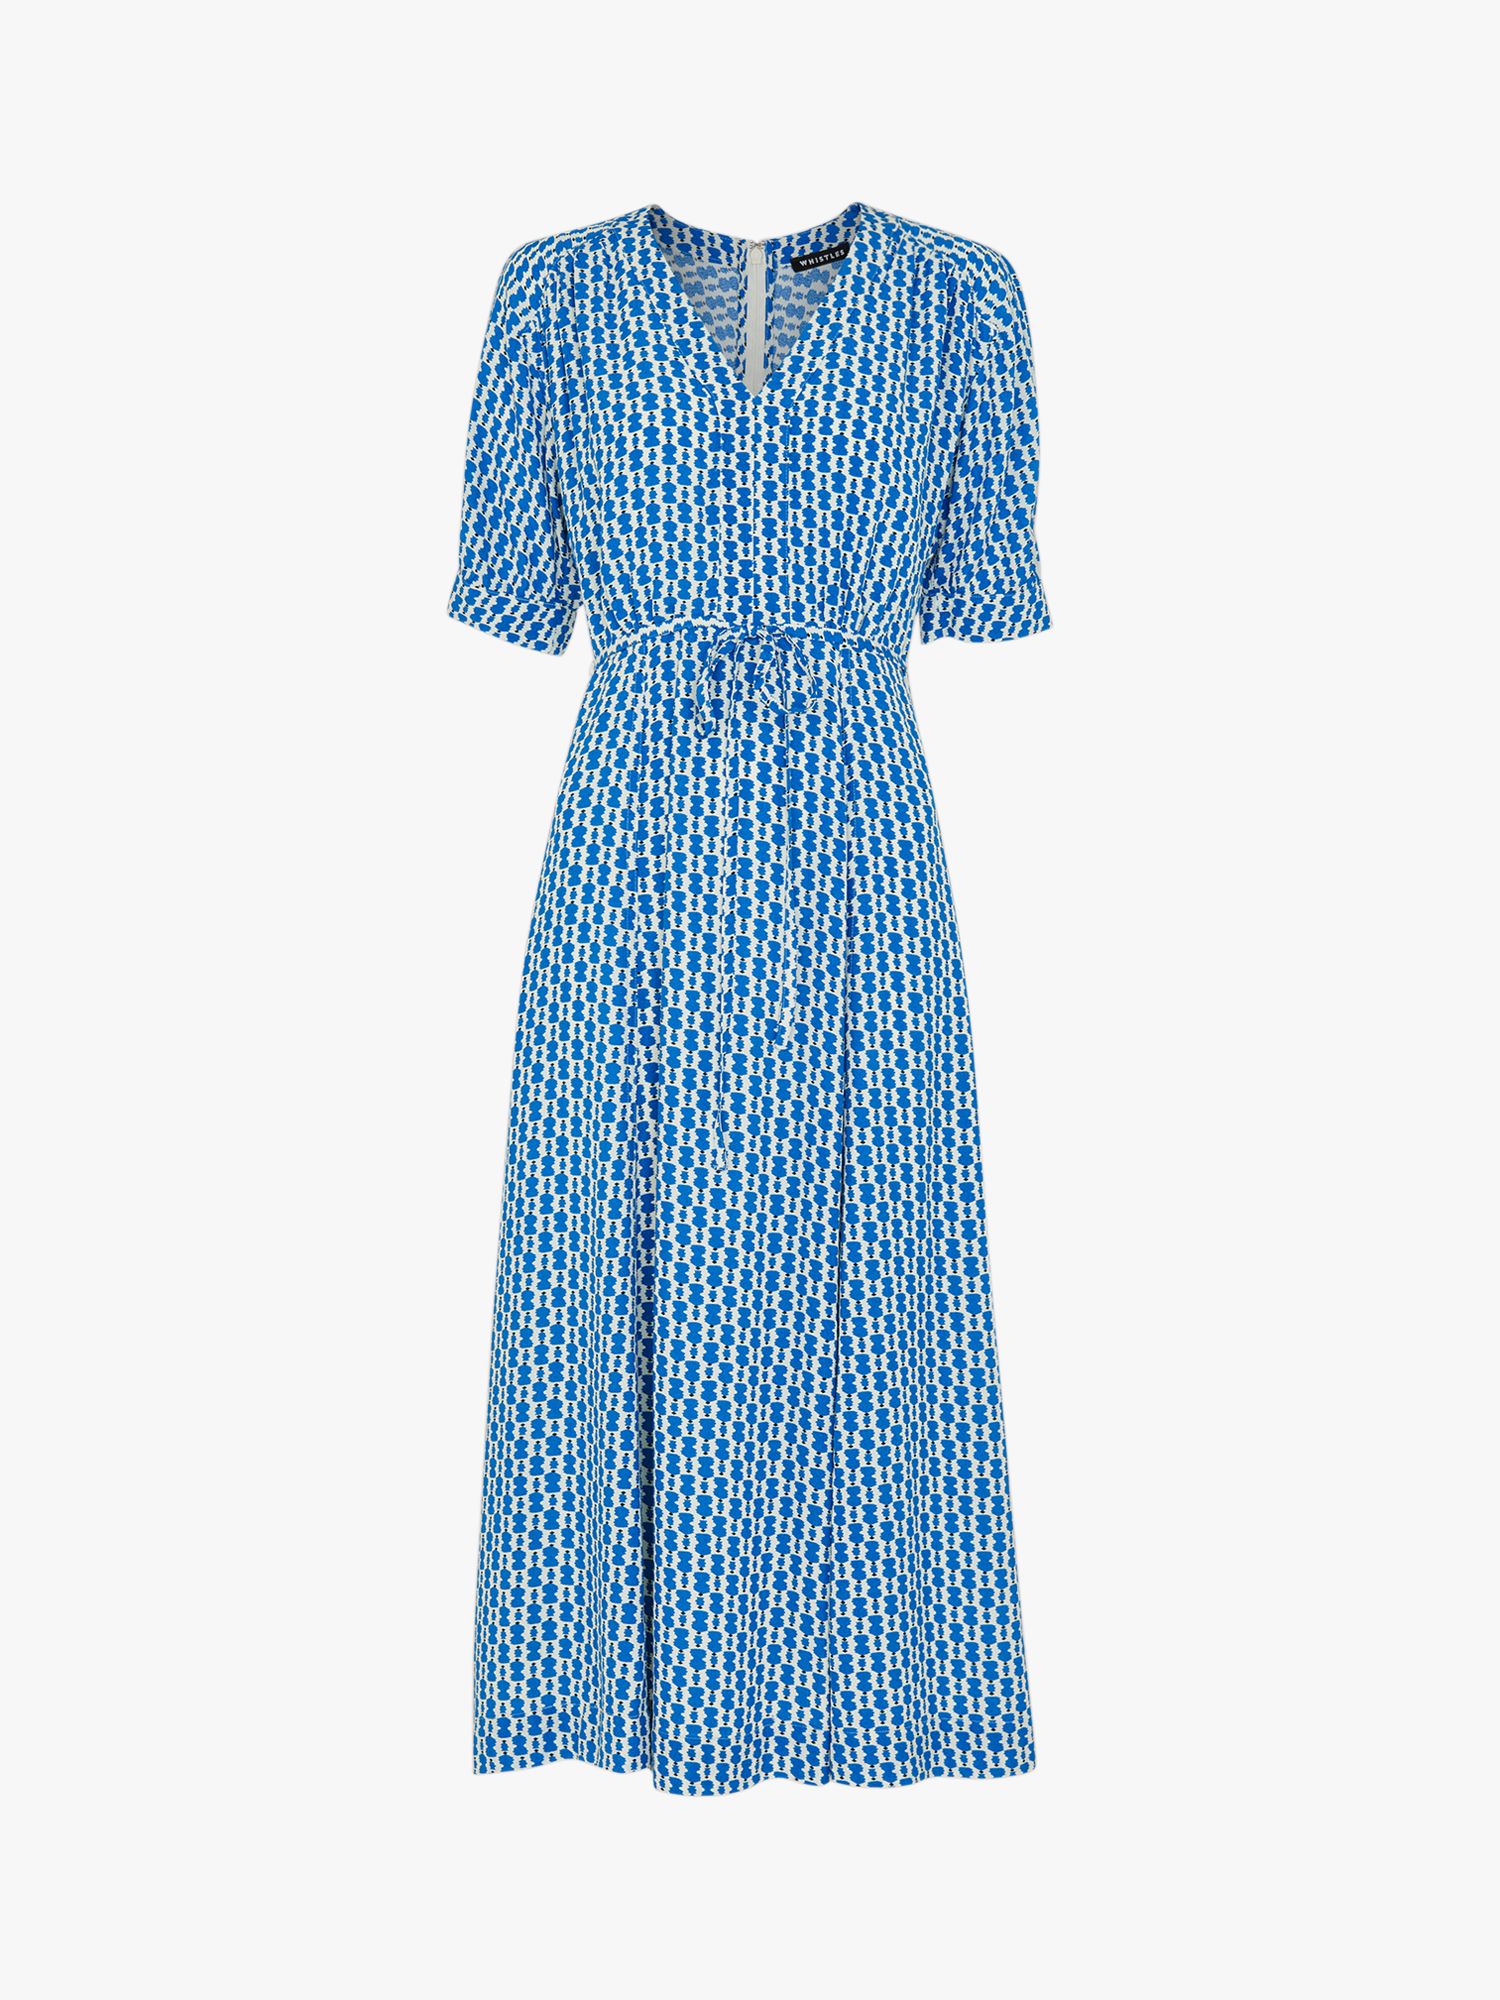 Whistles Vertical Stack Print Midi Dress, Blue/Multi, 6